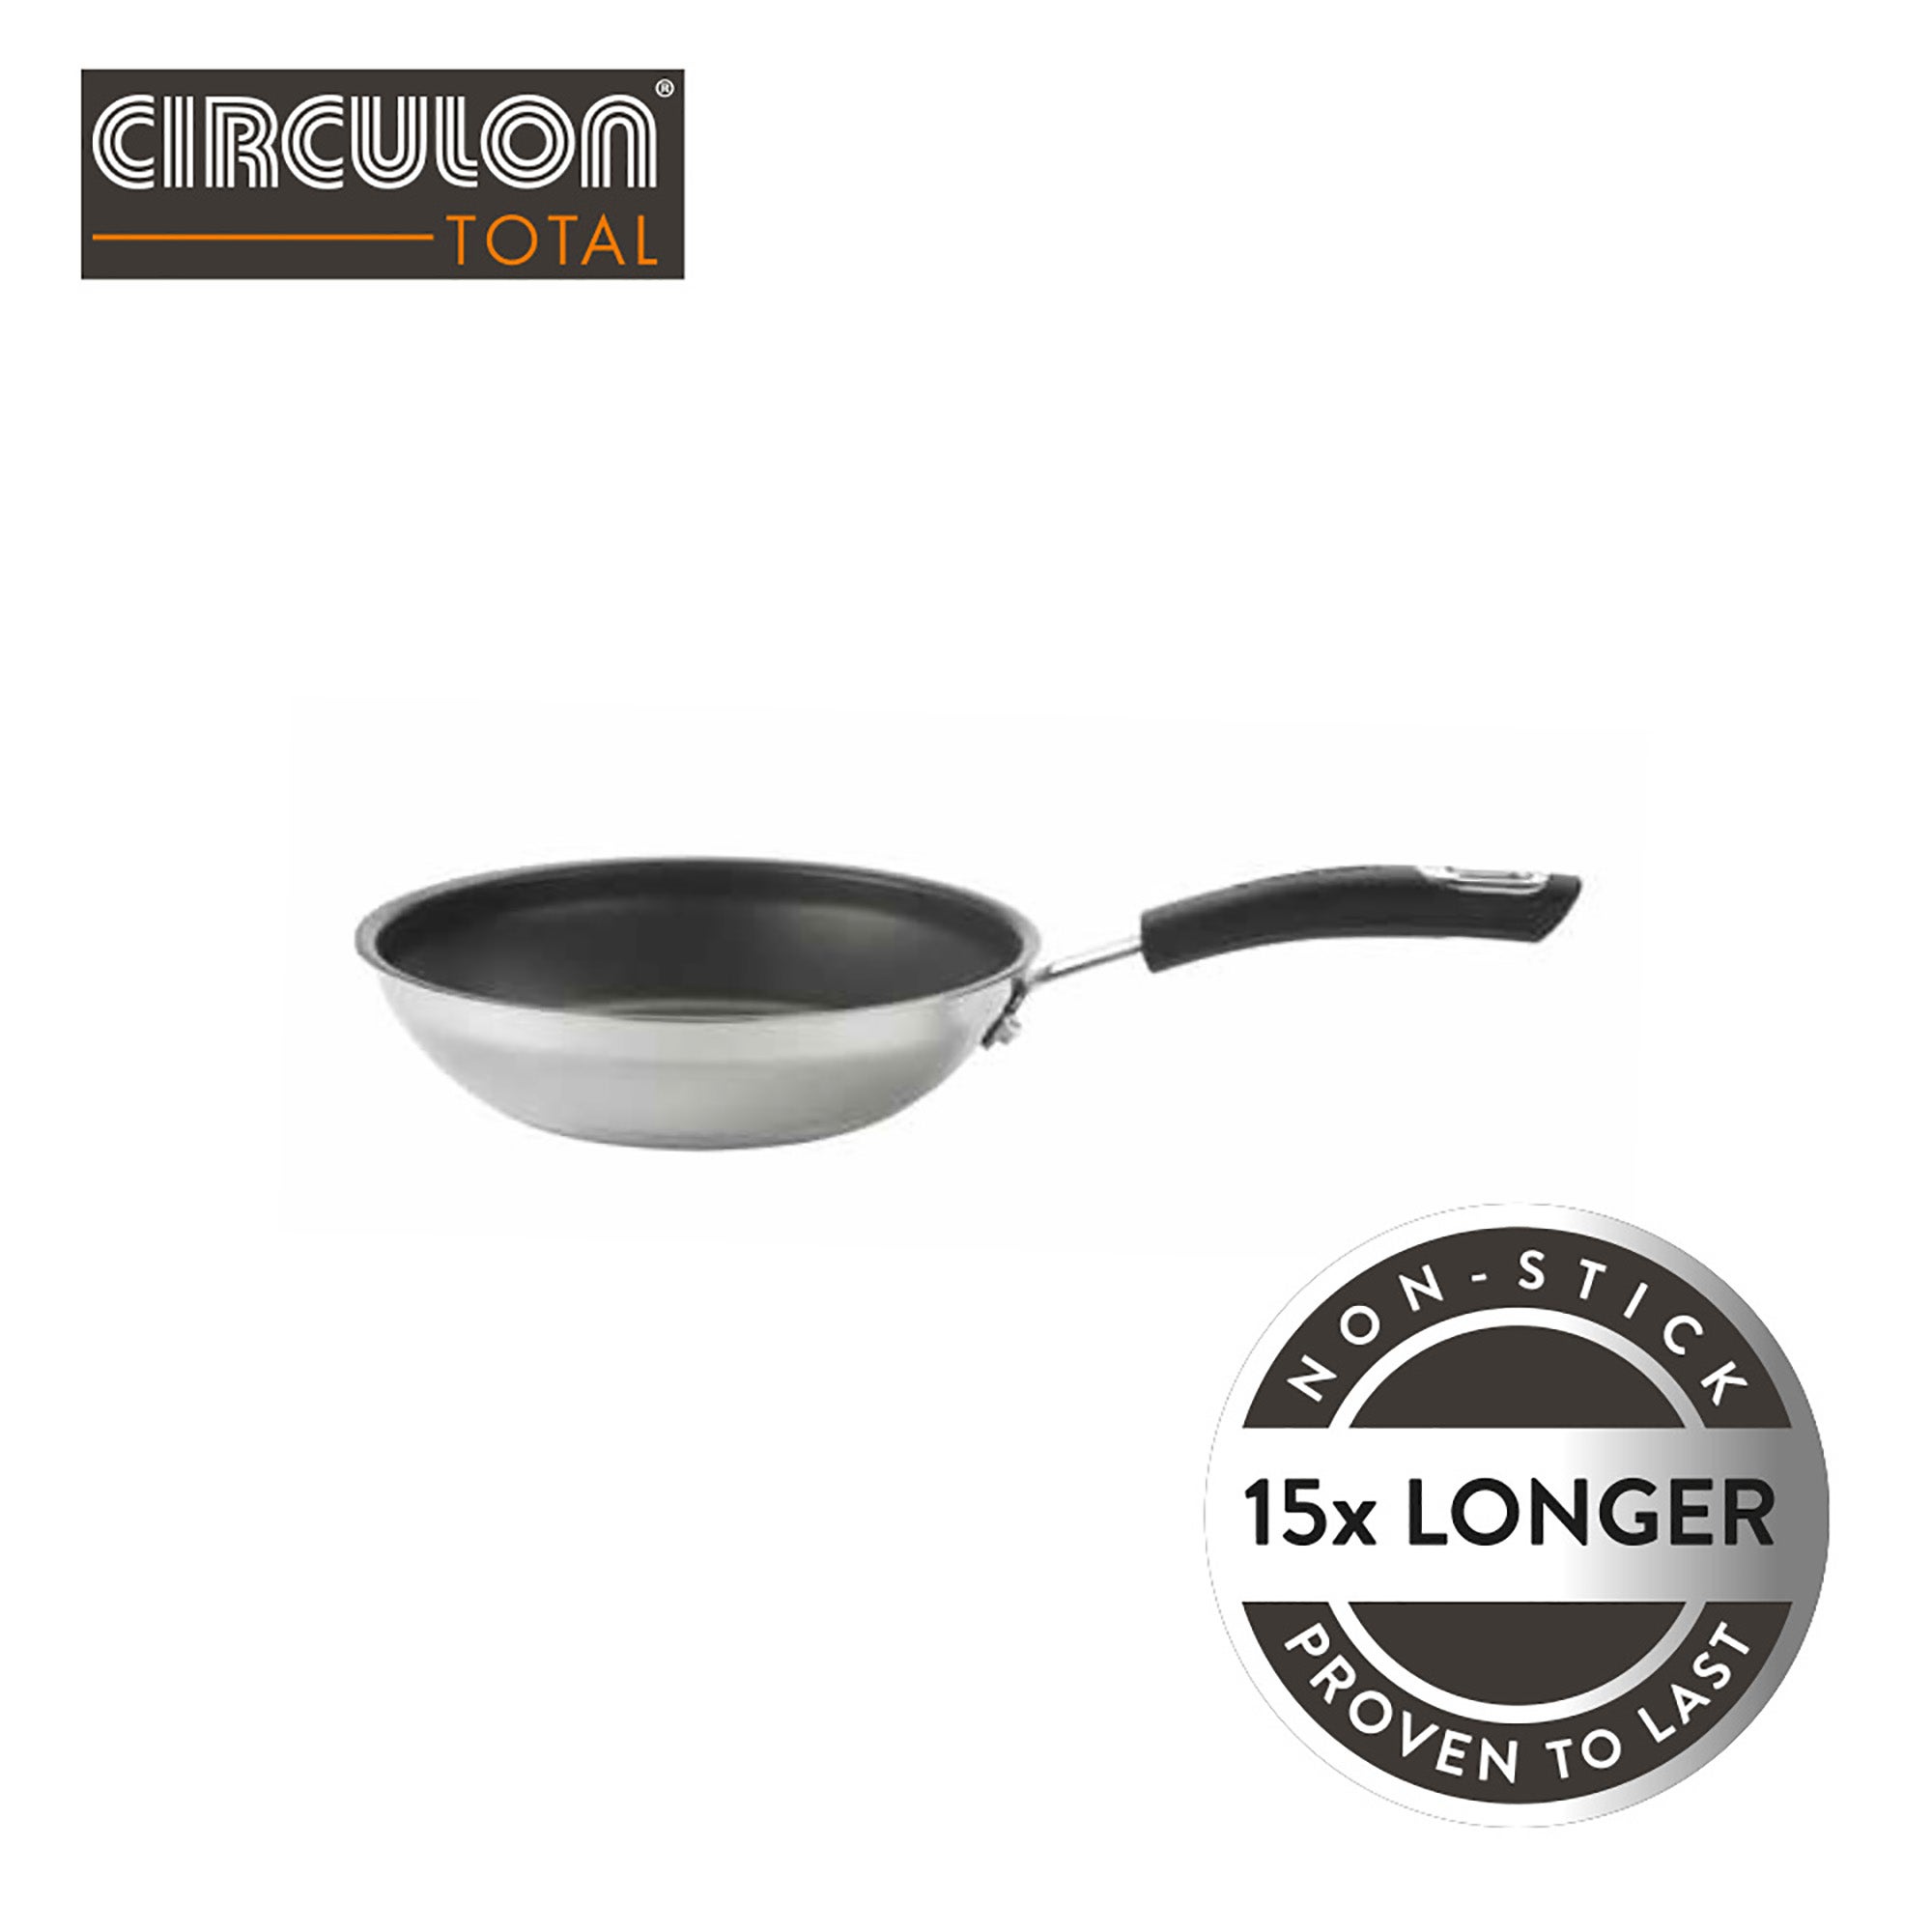 Circulon Total Non-Stick Stainless Steel Frying Pan, 22cm